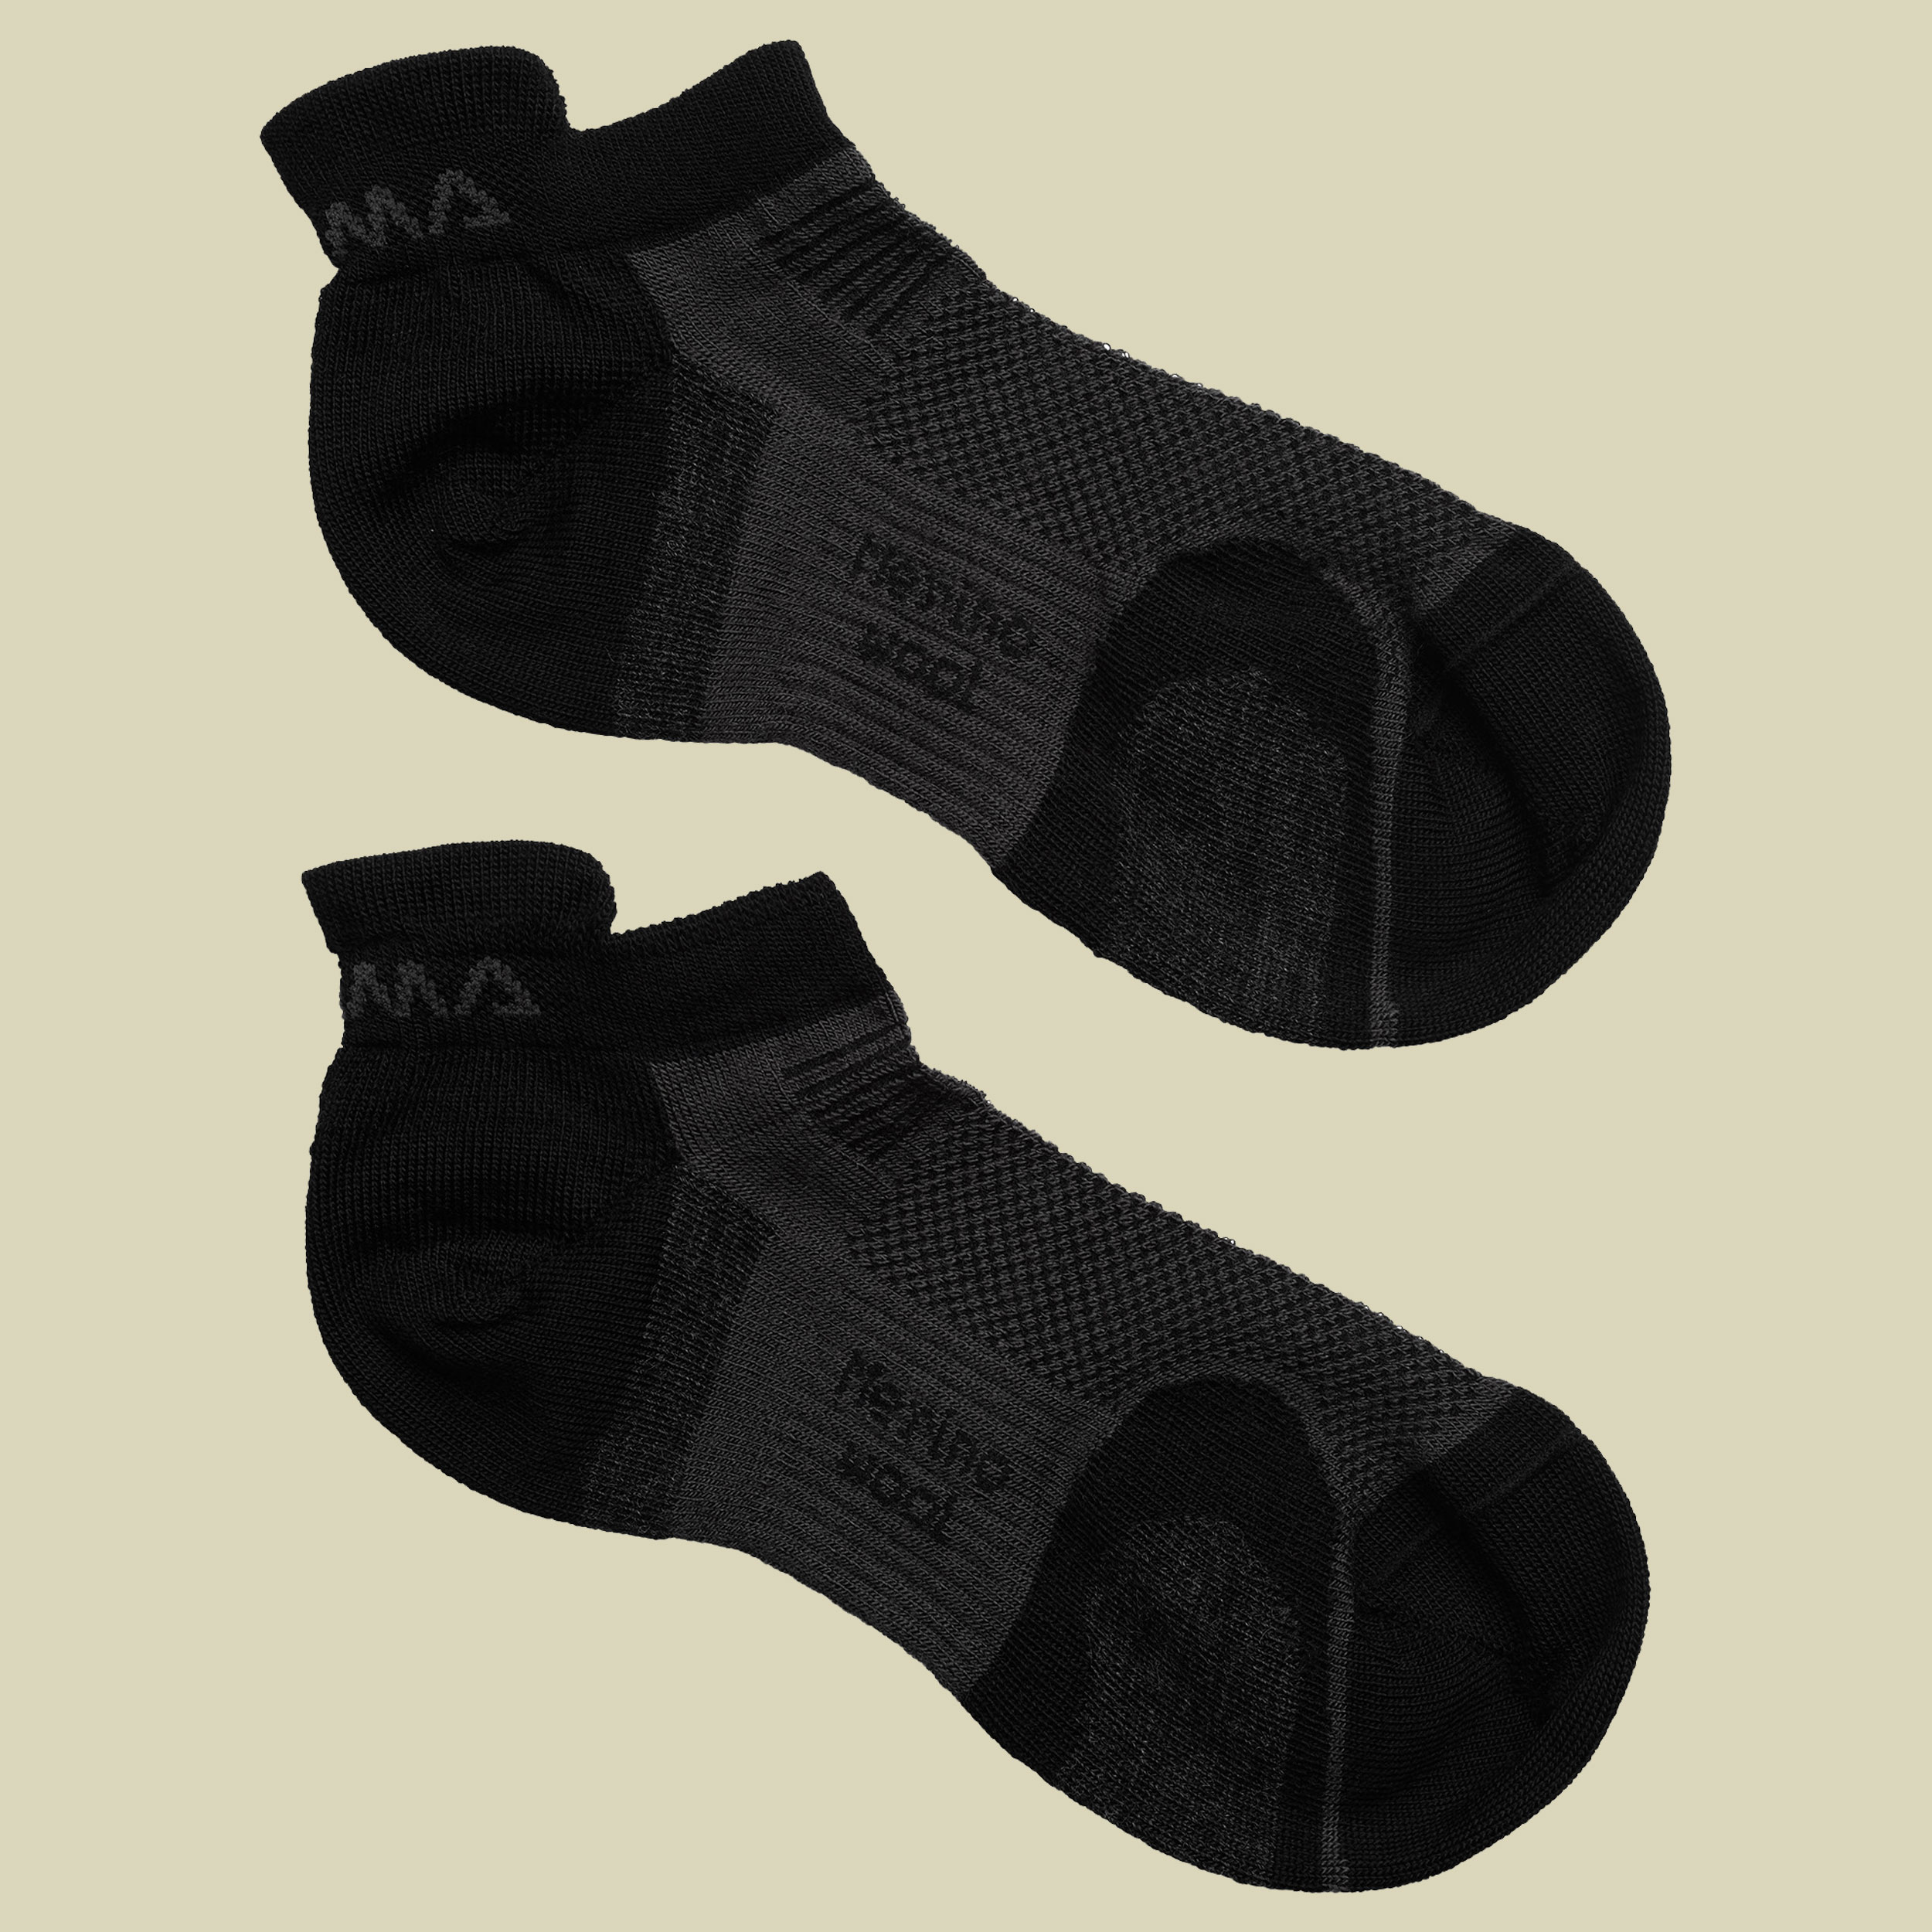 Ankle Socks Größe 40-43 Farbe iron gate/jet black